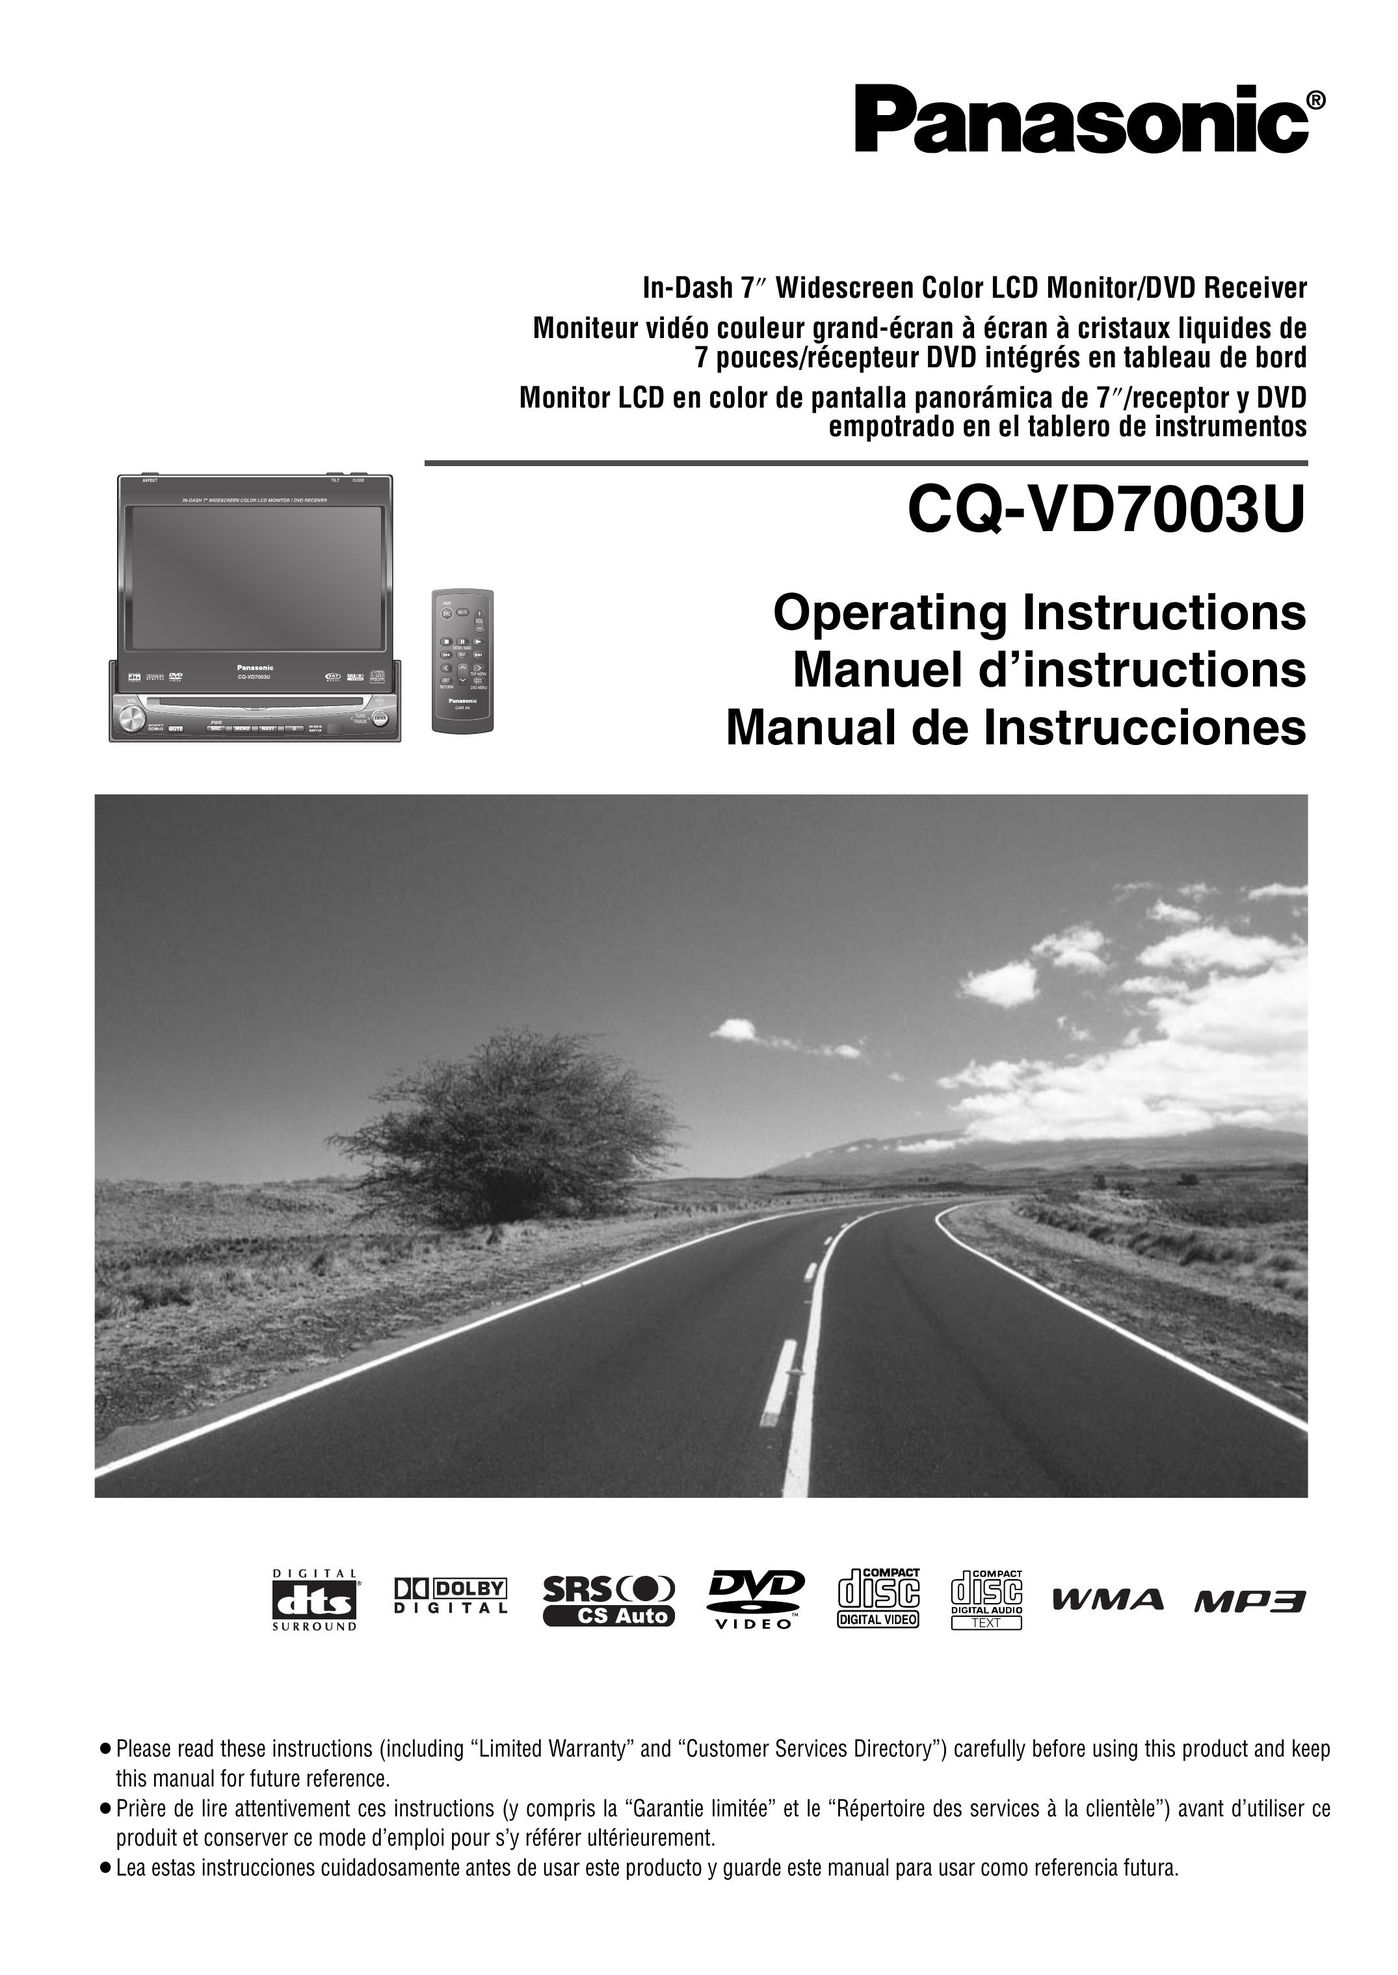 Panasonic CQ-VD7003U Car Video System User Manual